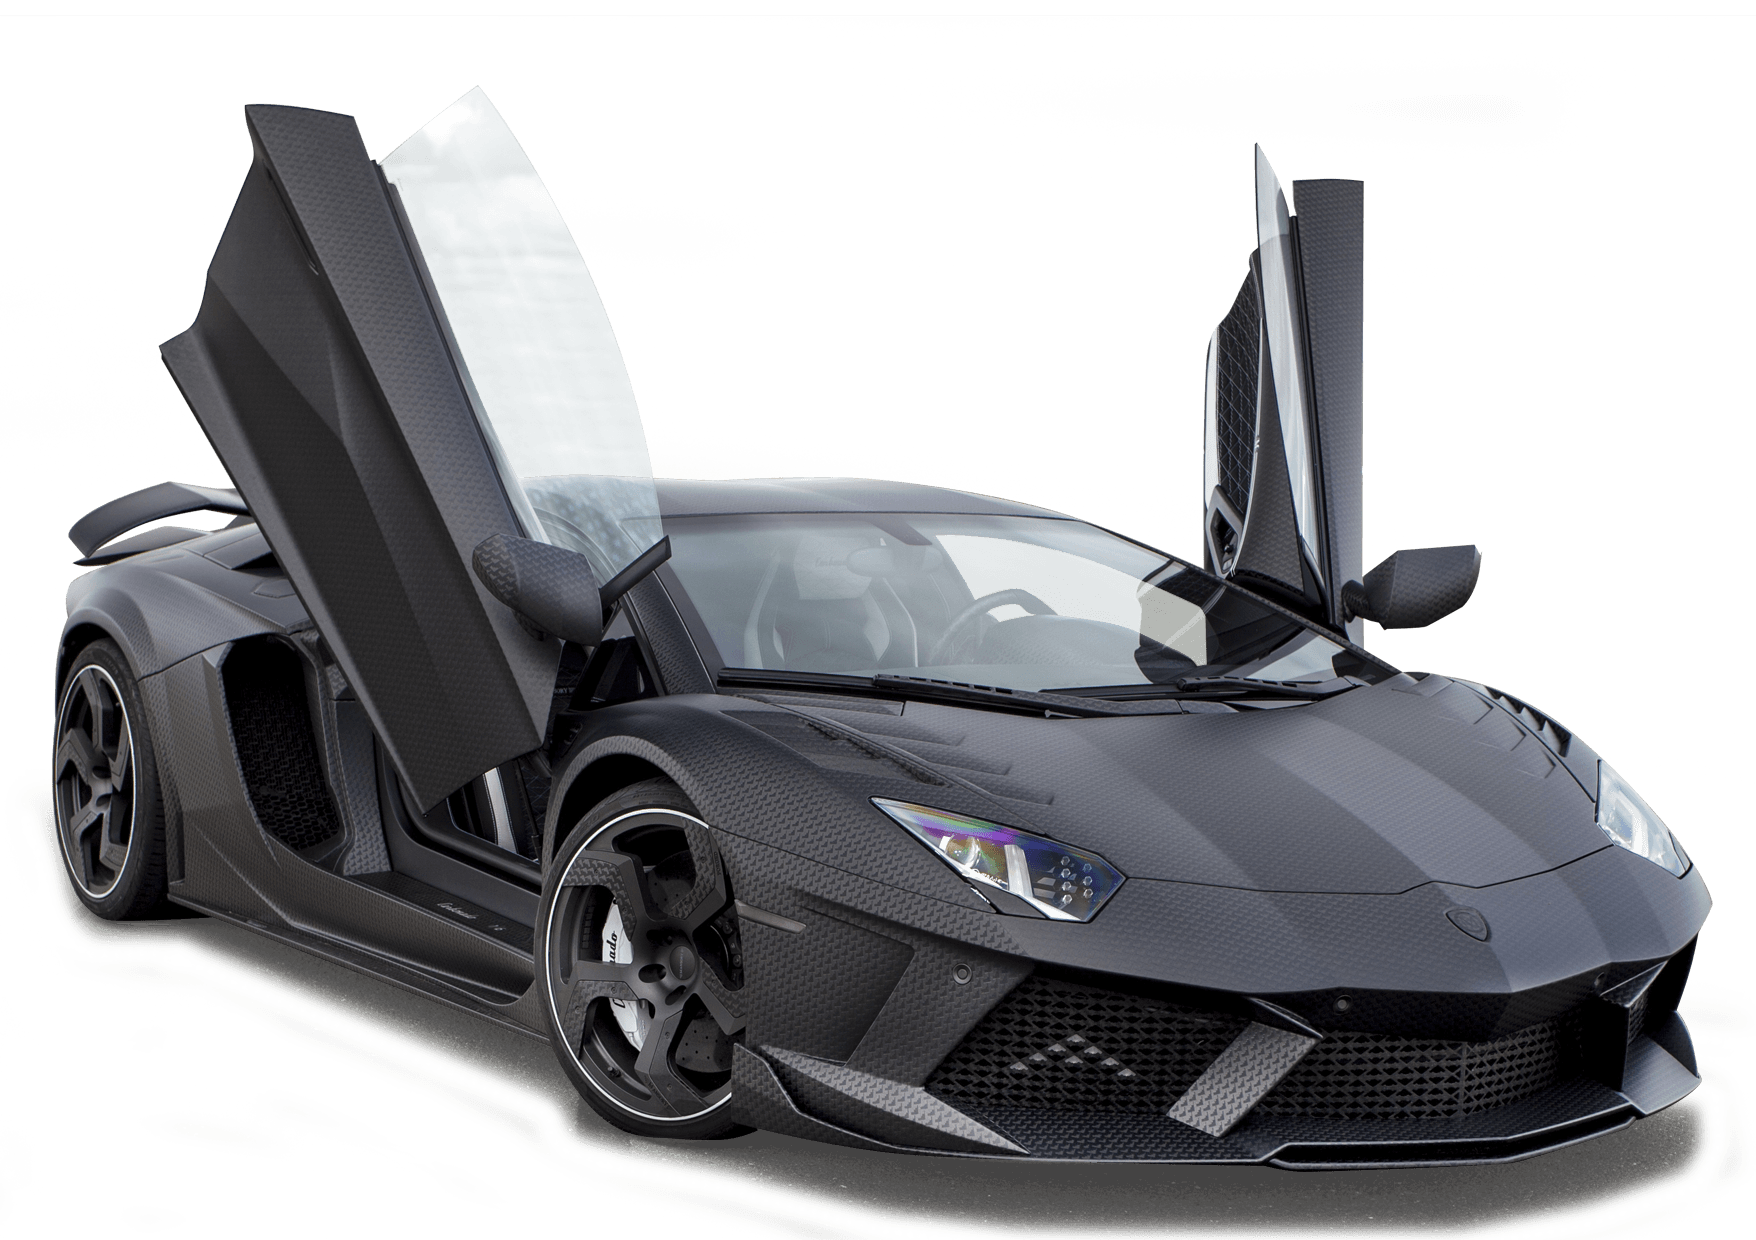 Lamborghini Aventador PNG High Quality Image